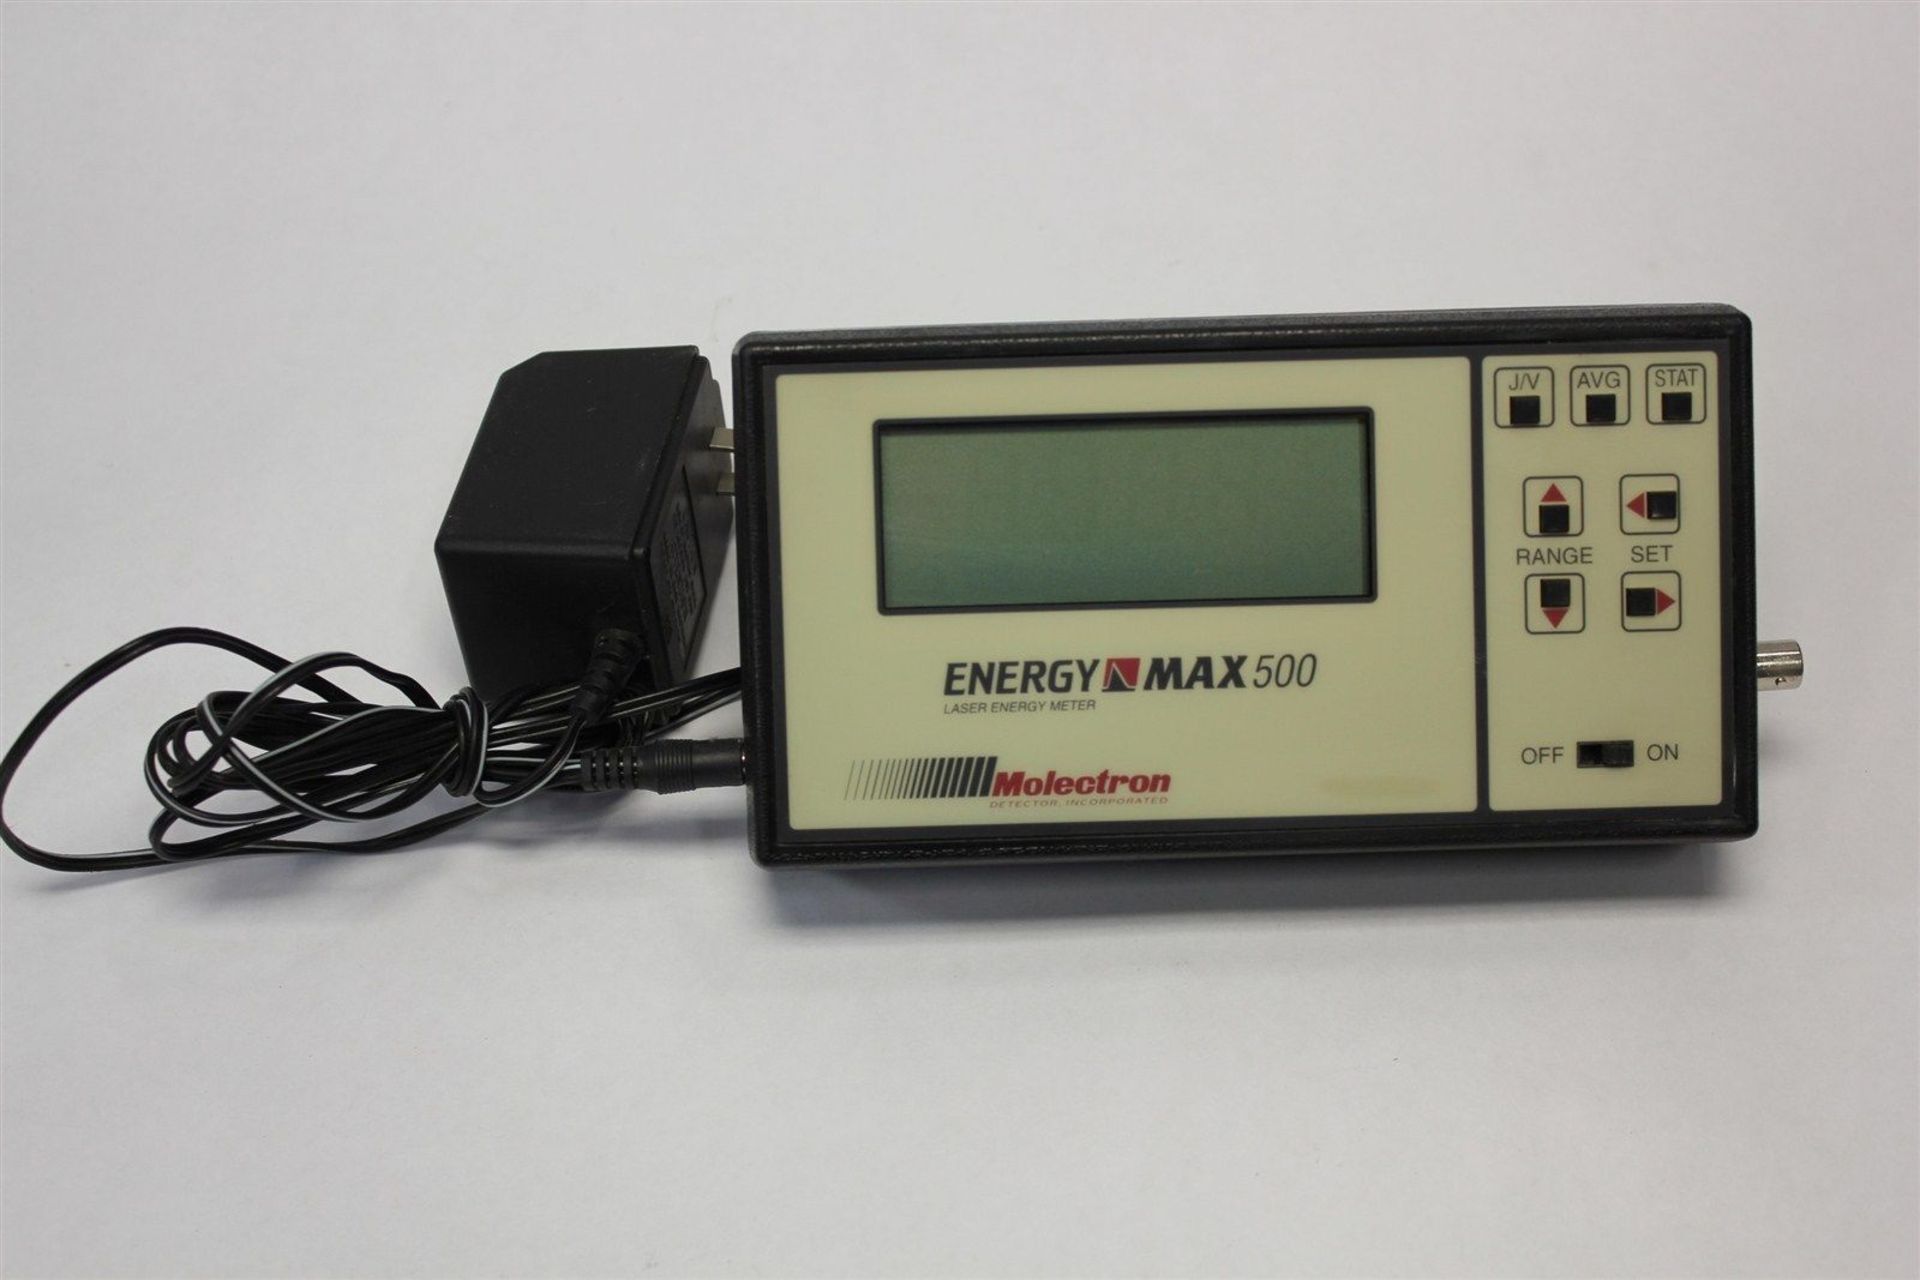 Molectron Em500 Energy Max 500 Laser Energy Meter